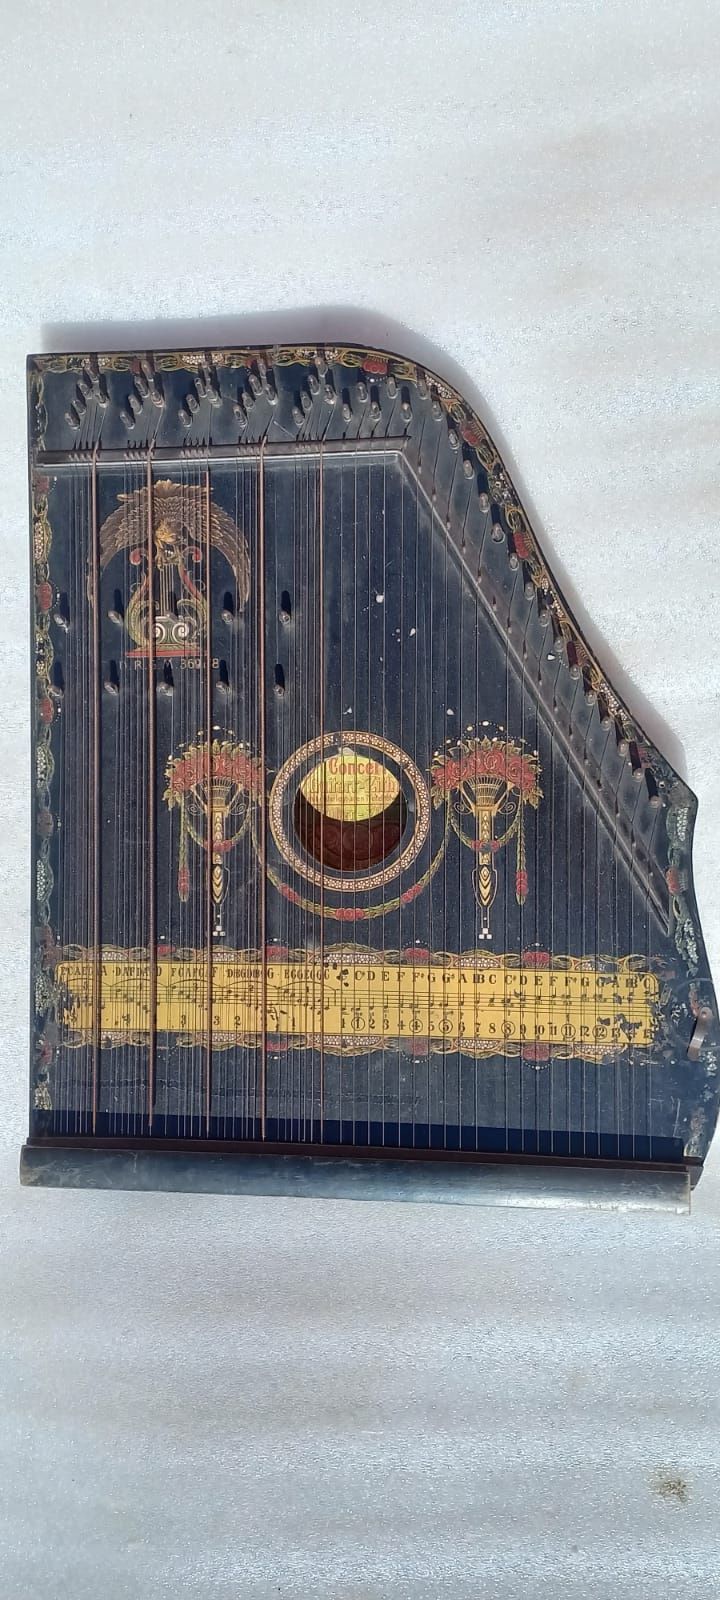 Țiteră zitera citera instrument muzical vechi coarde ciupite colectie